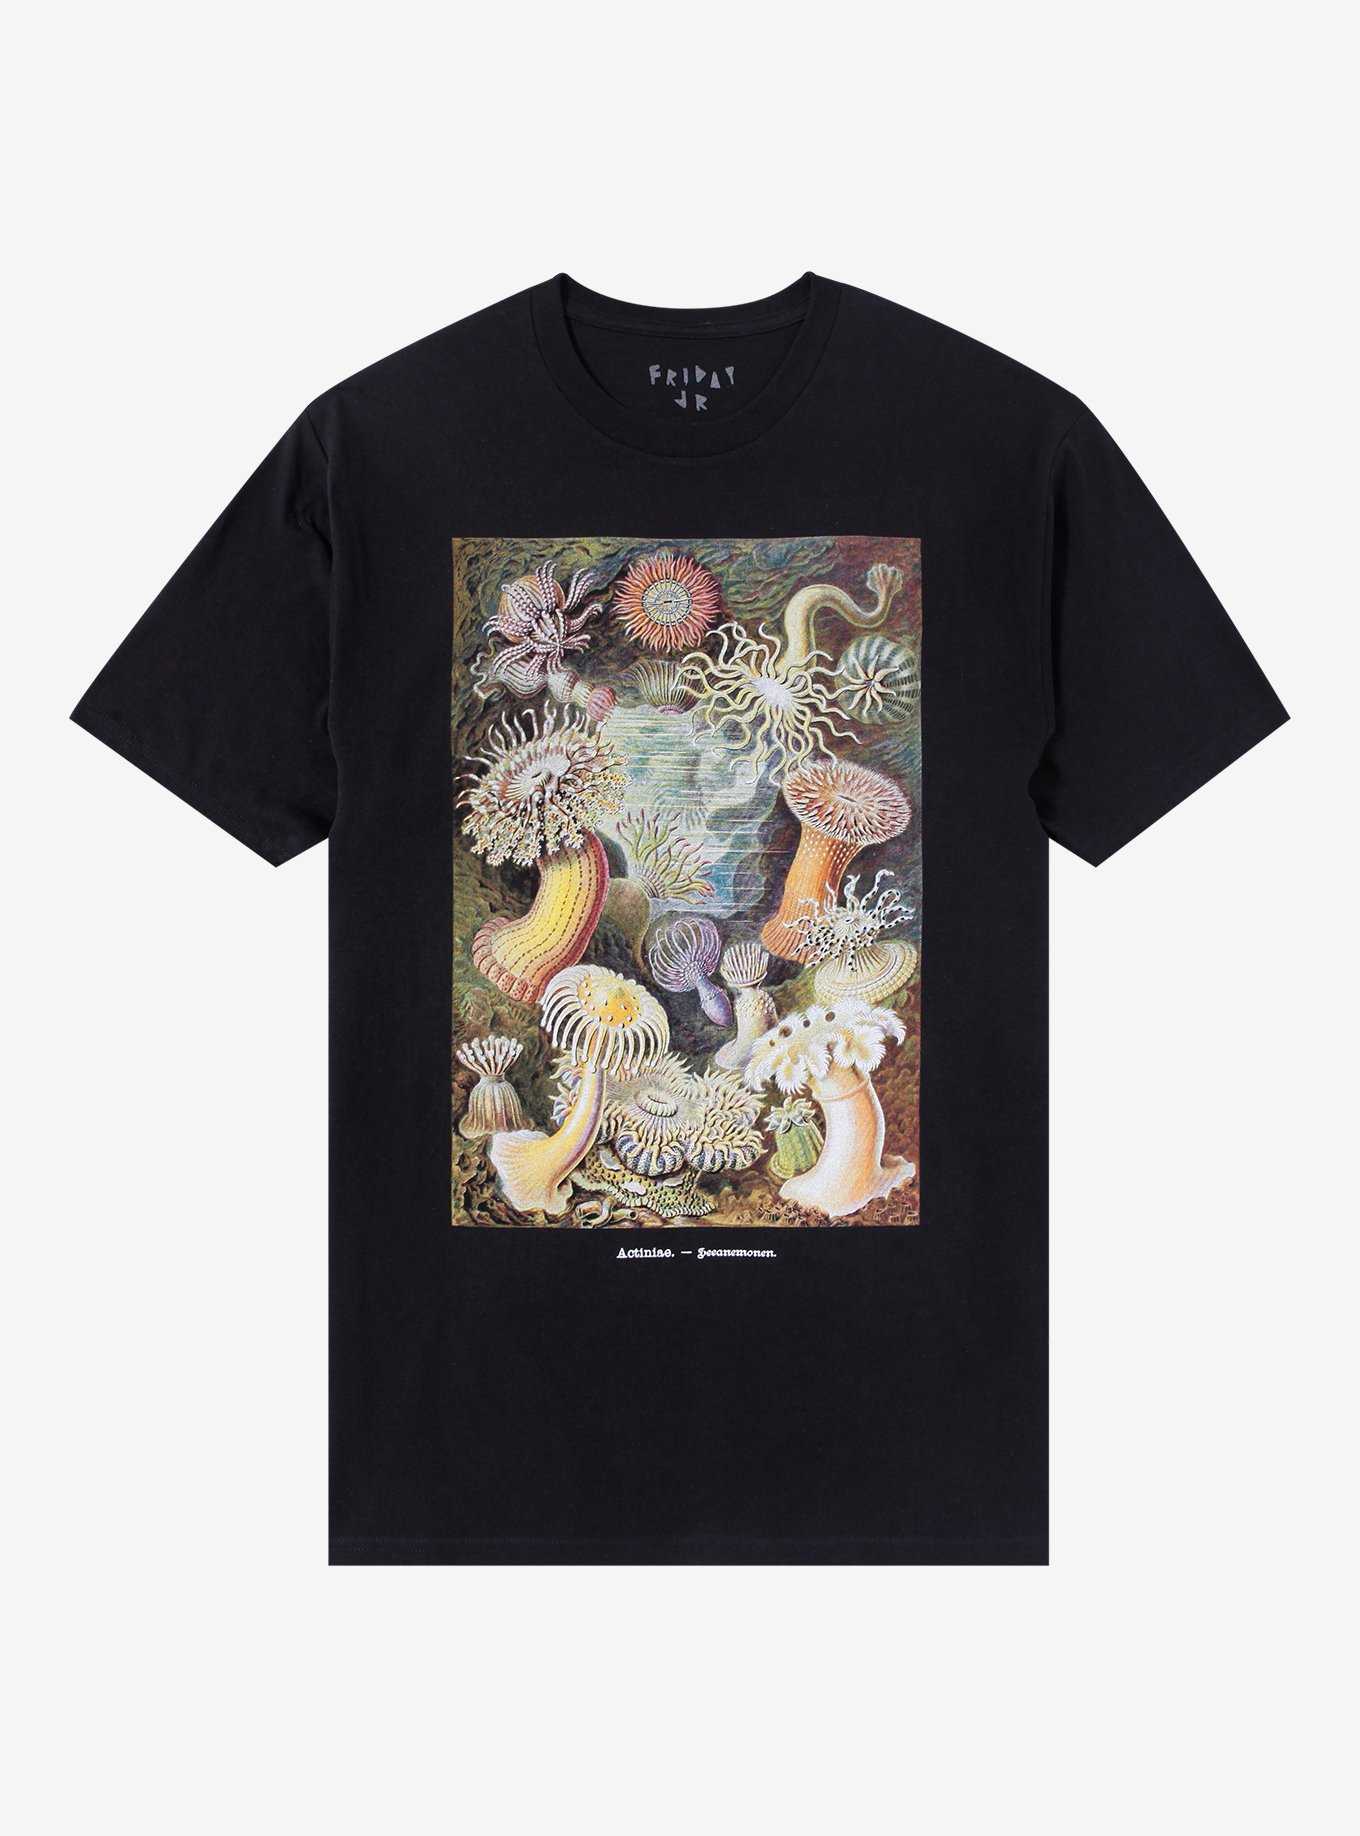 Sea Anemone T-Shirt By Friday Jr, , hi-res